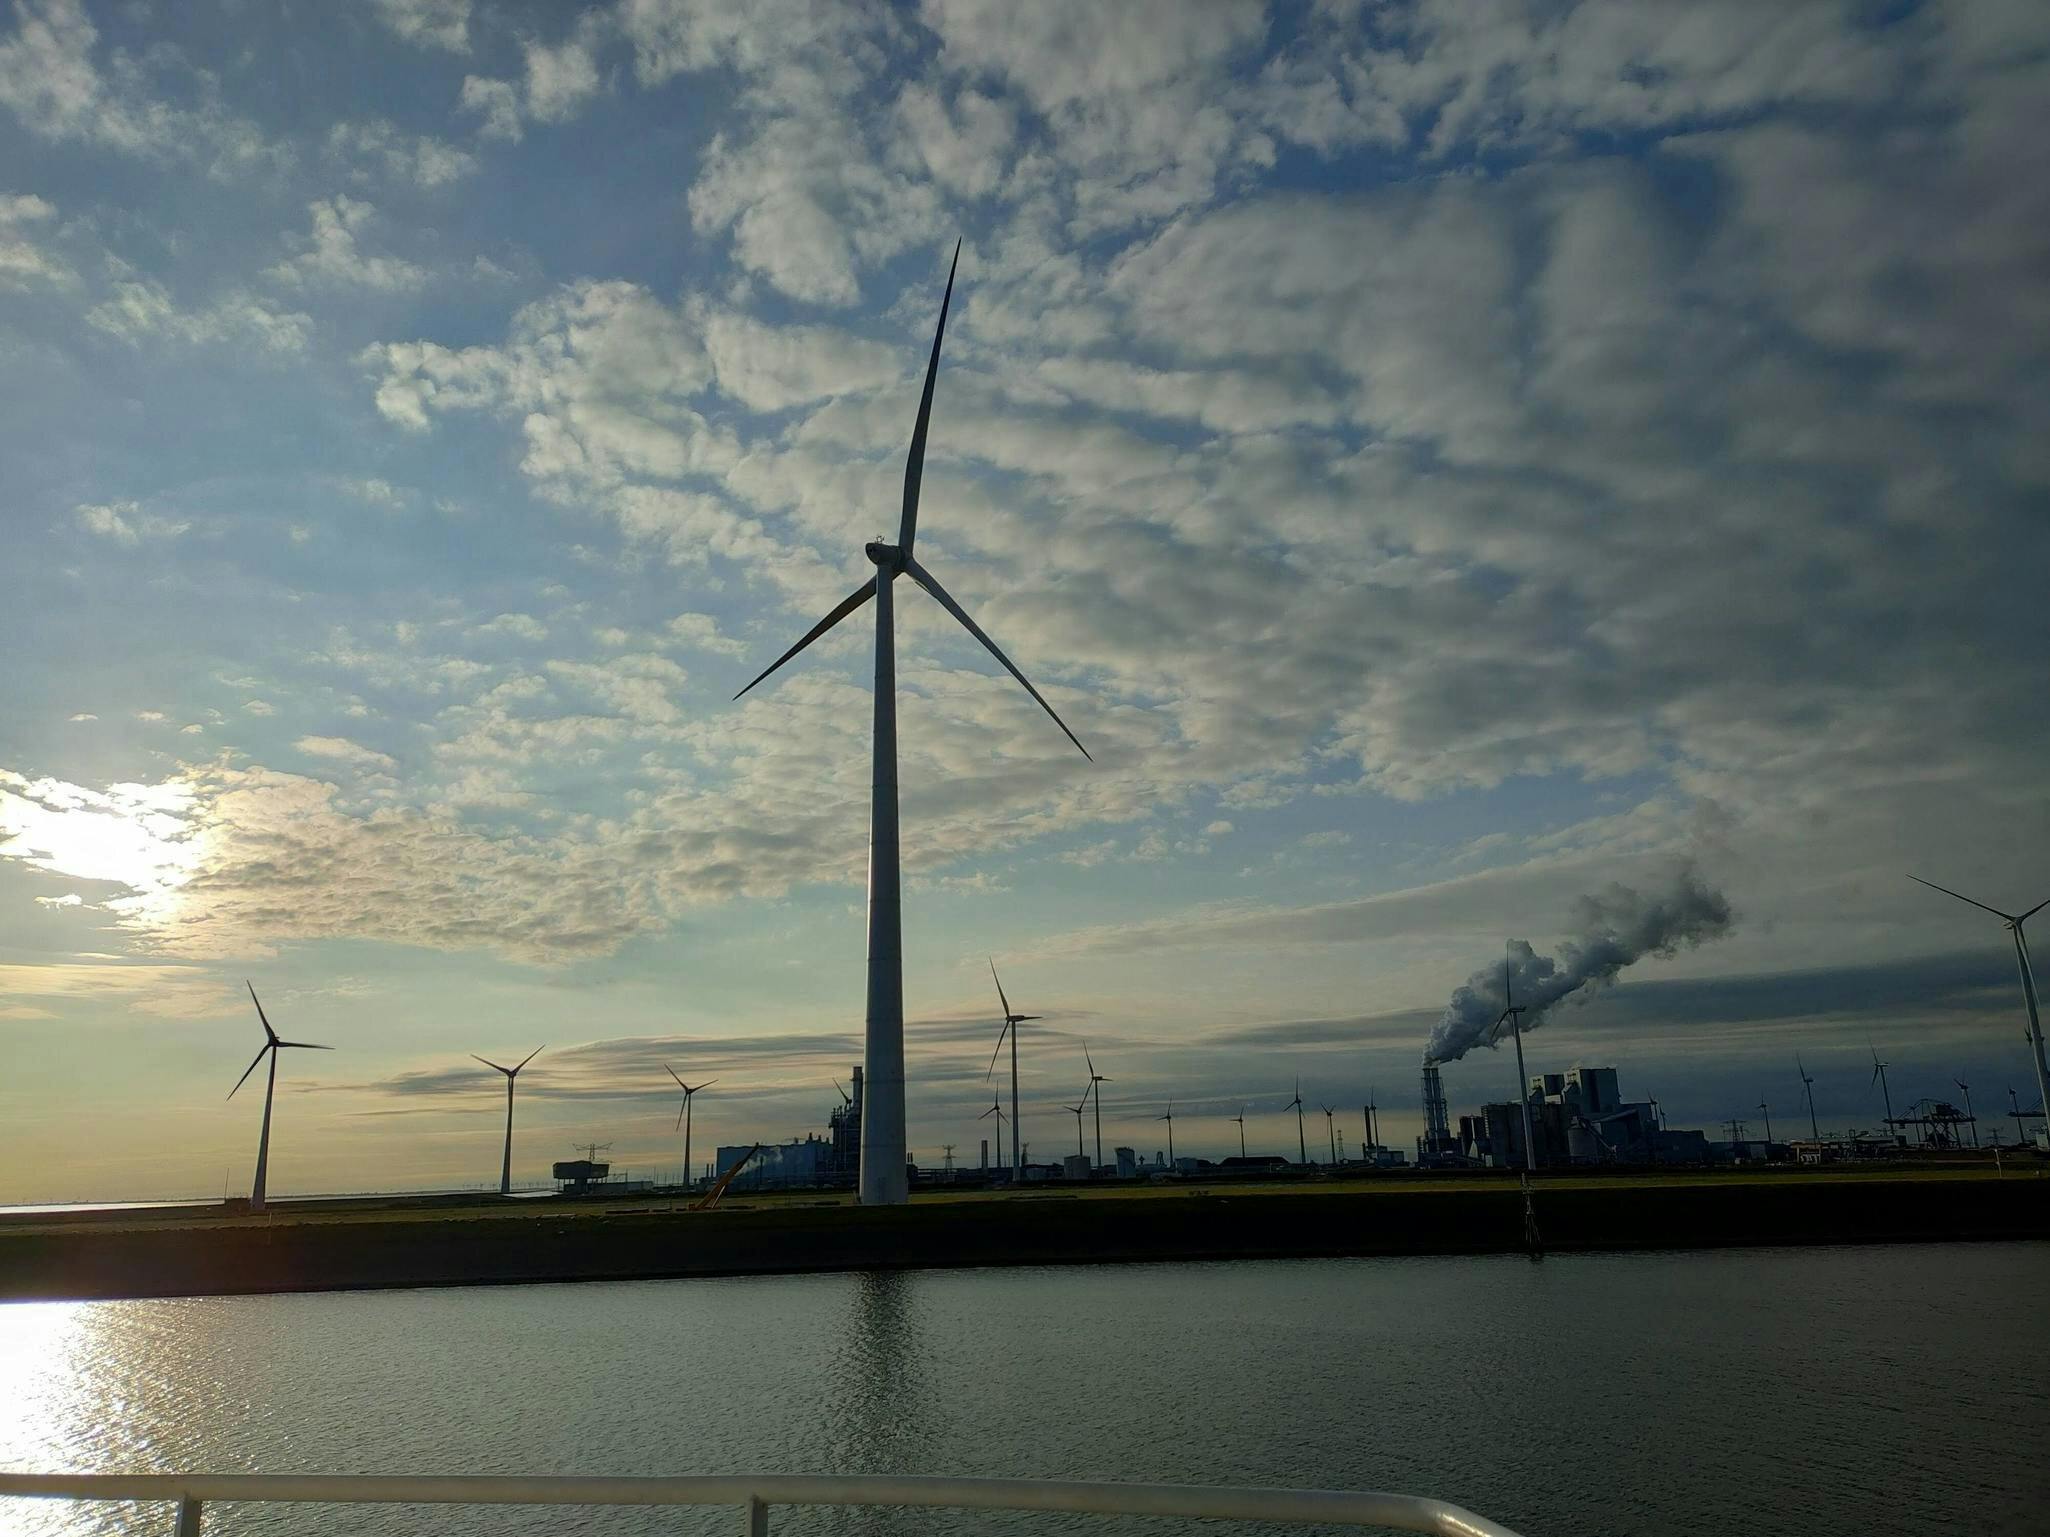 Wind turbines in a coastal environment